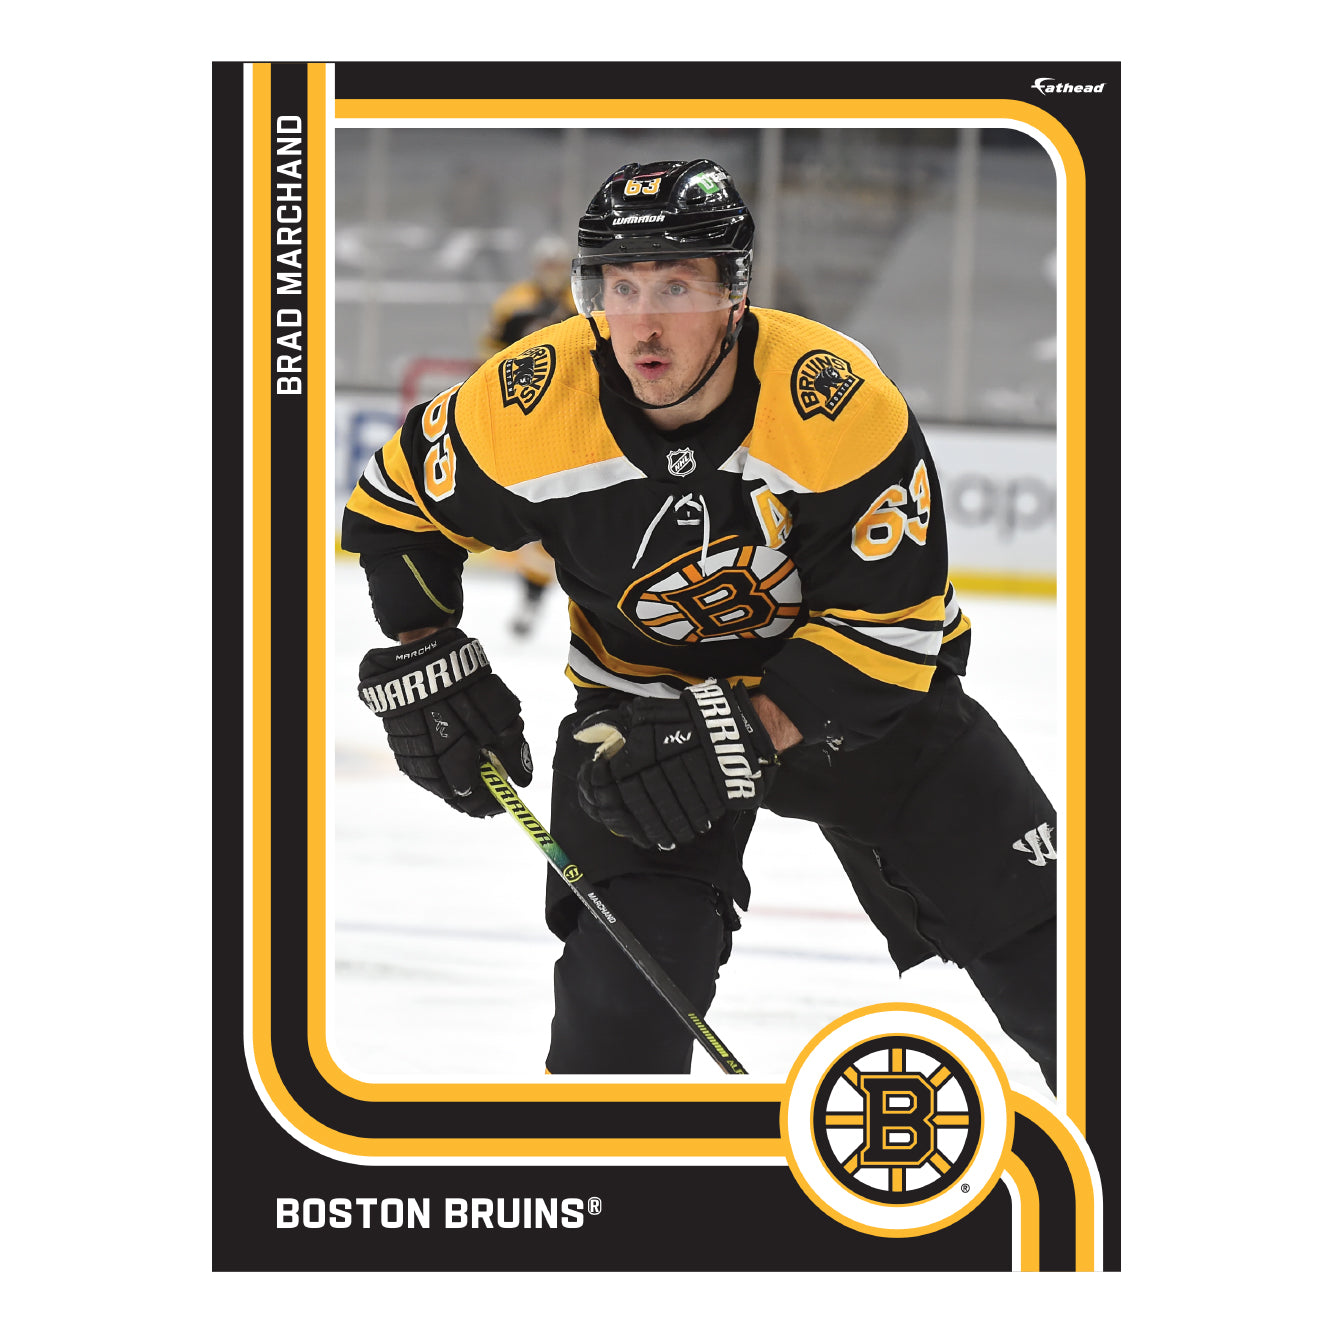 Brad Marchand  Boston bruins, Bruins hockey, Boston bruins hockey